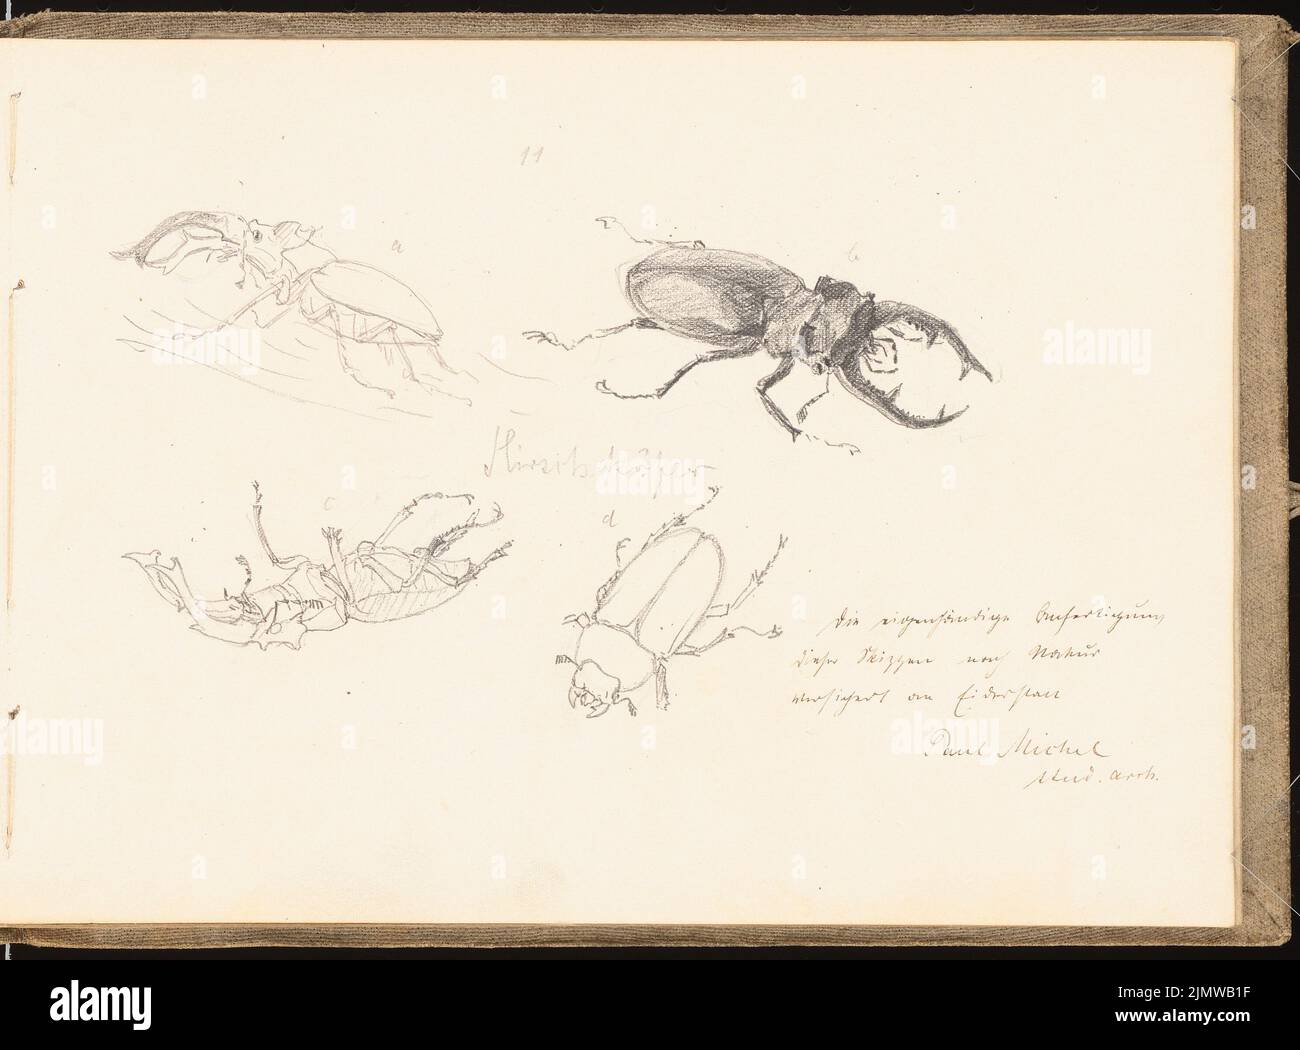 Michel Paul sen. (1877-1938), sketchbook. 1899 (1898-1898): deer beetle, 4 views. Pencil on paper, 18.6 x 25.2 cm (including scan edges) Michel Paul sen.  (1877-1938): Skizzenbuch. 1899 Stock Photo